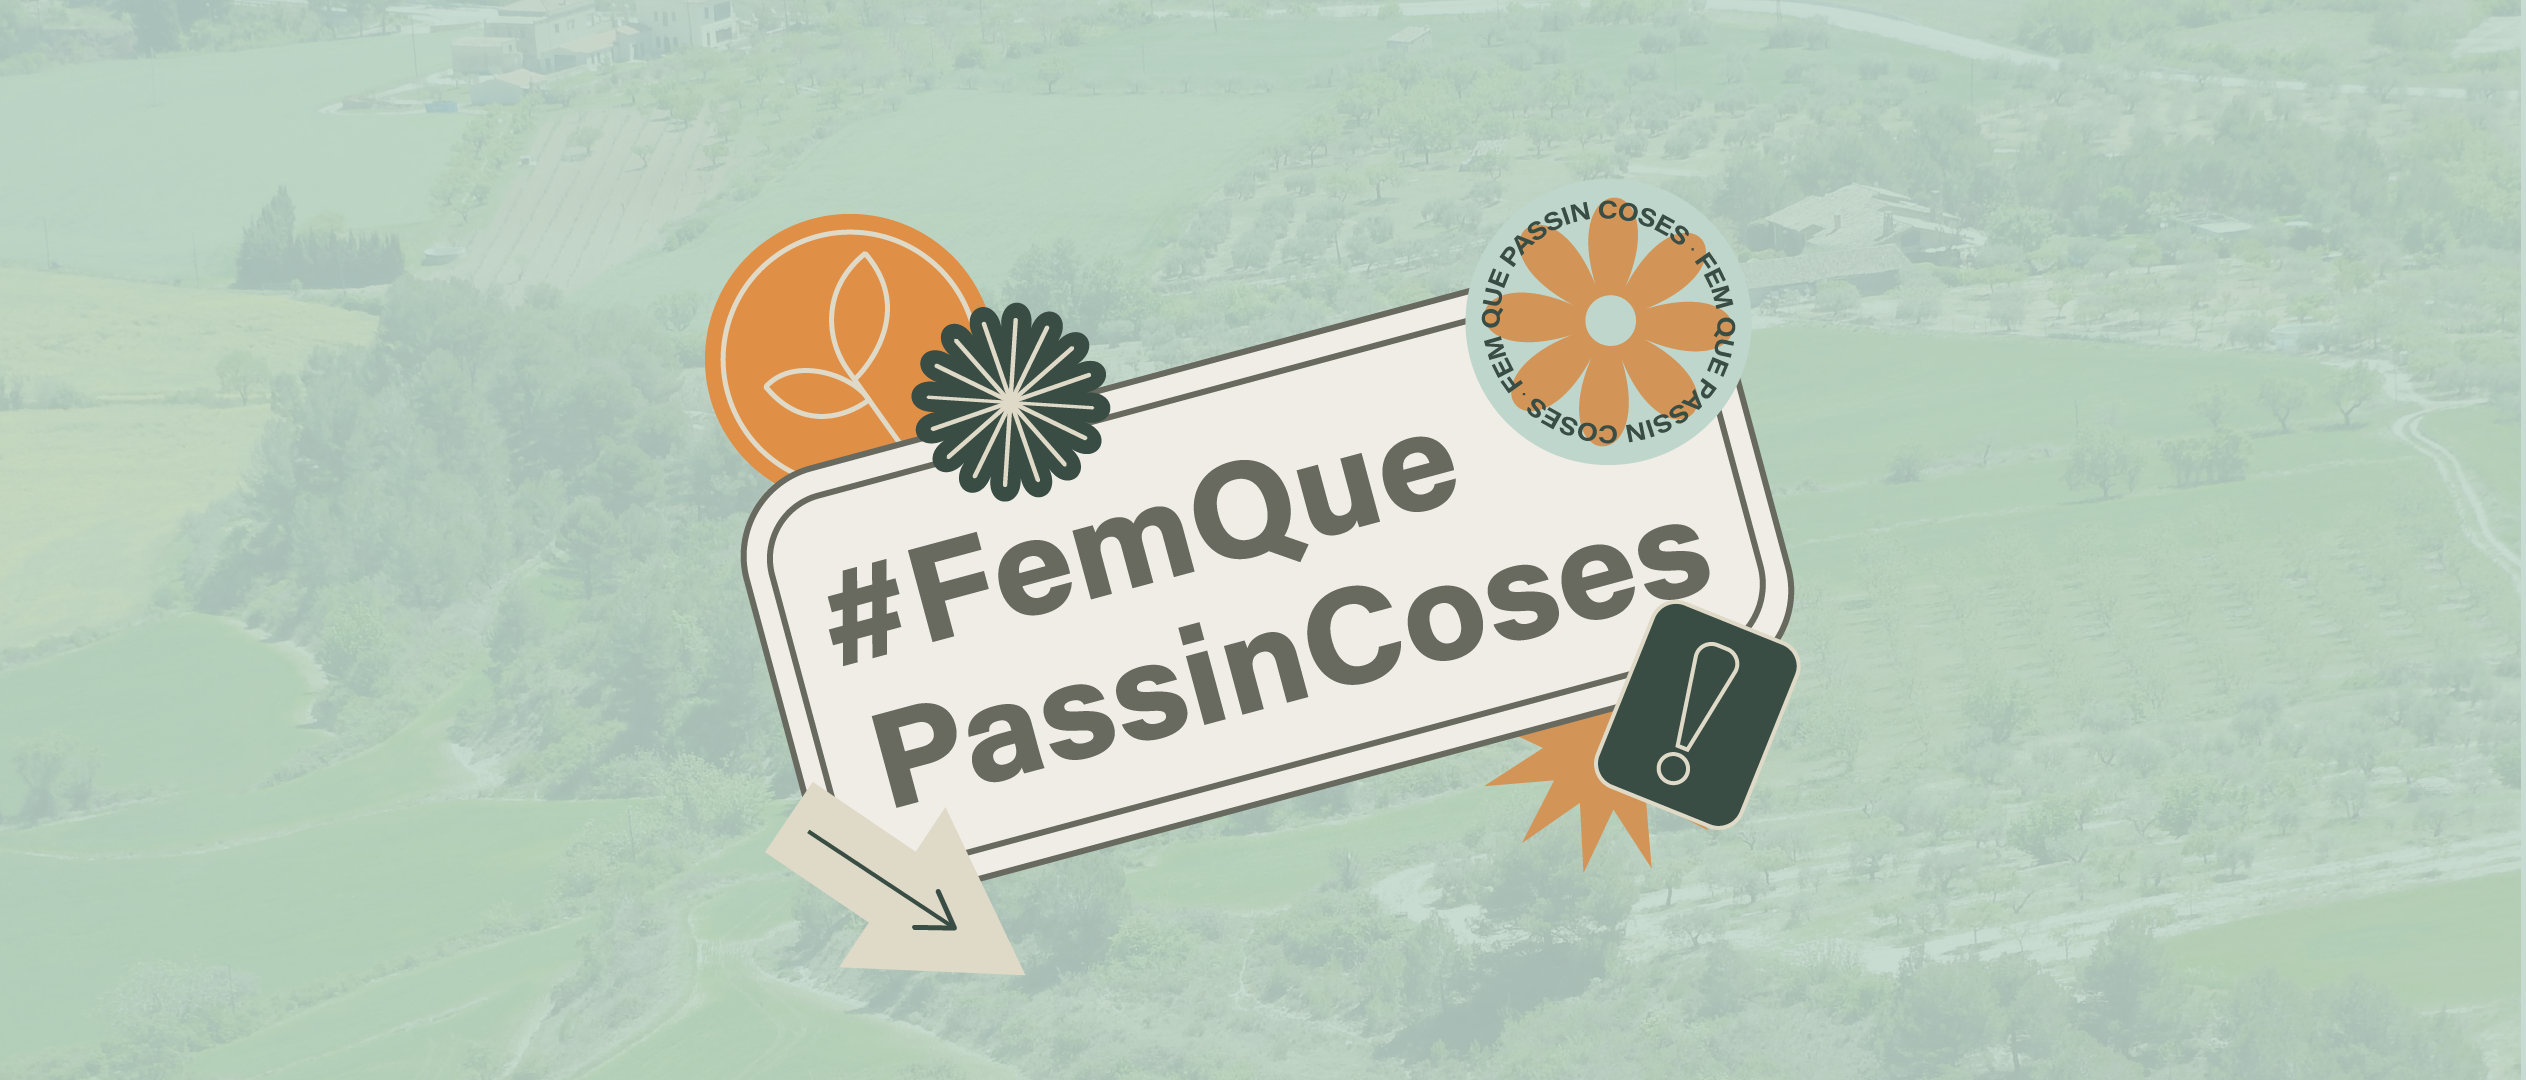 Imatge Arrenca la campanya #FemQuePassinCoses